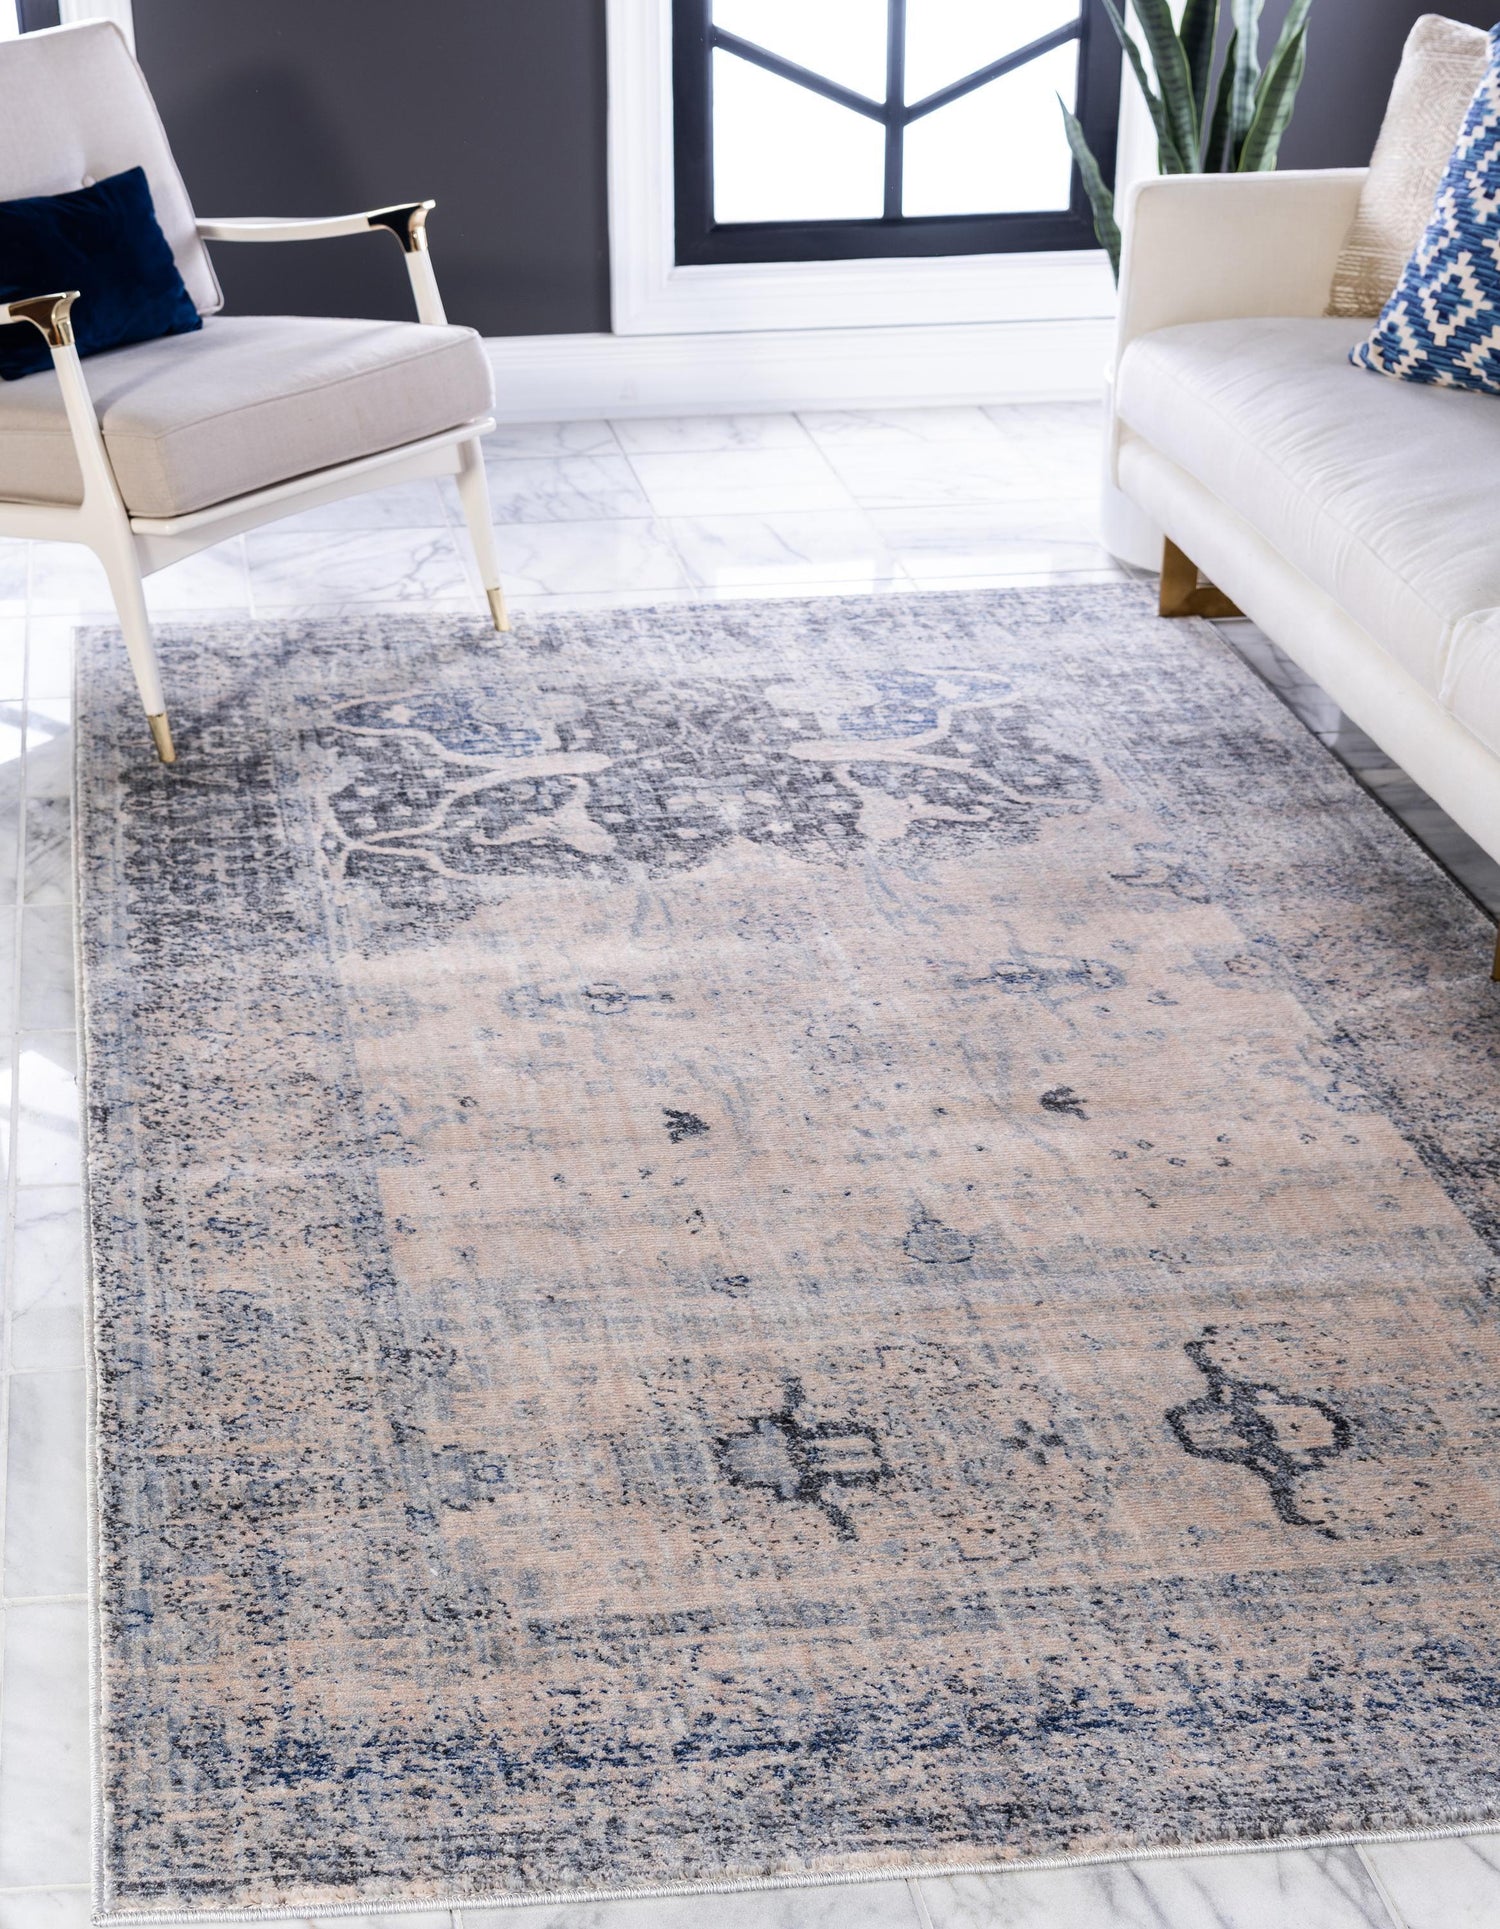 Damari - Modern Area Rug - Nordic Side - abstract-rug, Area-rug, feed-cl0-over-80-dollars, geometric-rug, hallway-runner, large-rug, modern, modern-nordic, modern-rug, round-rug, unique-loom,